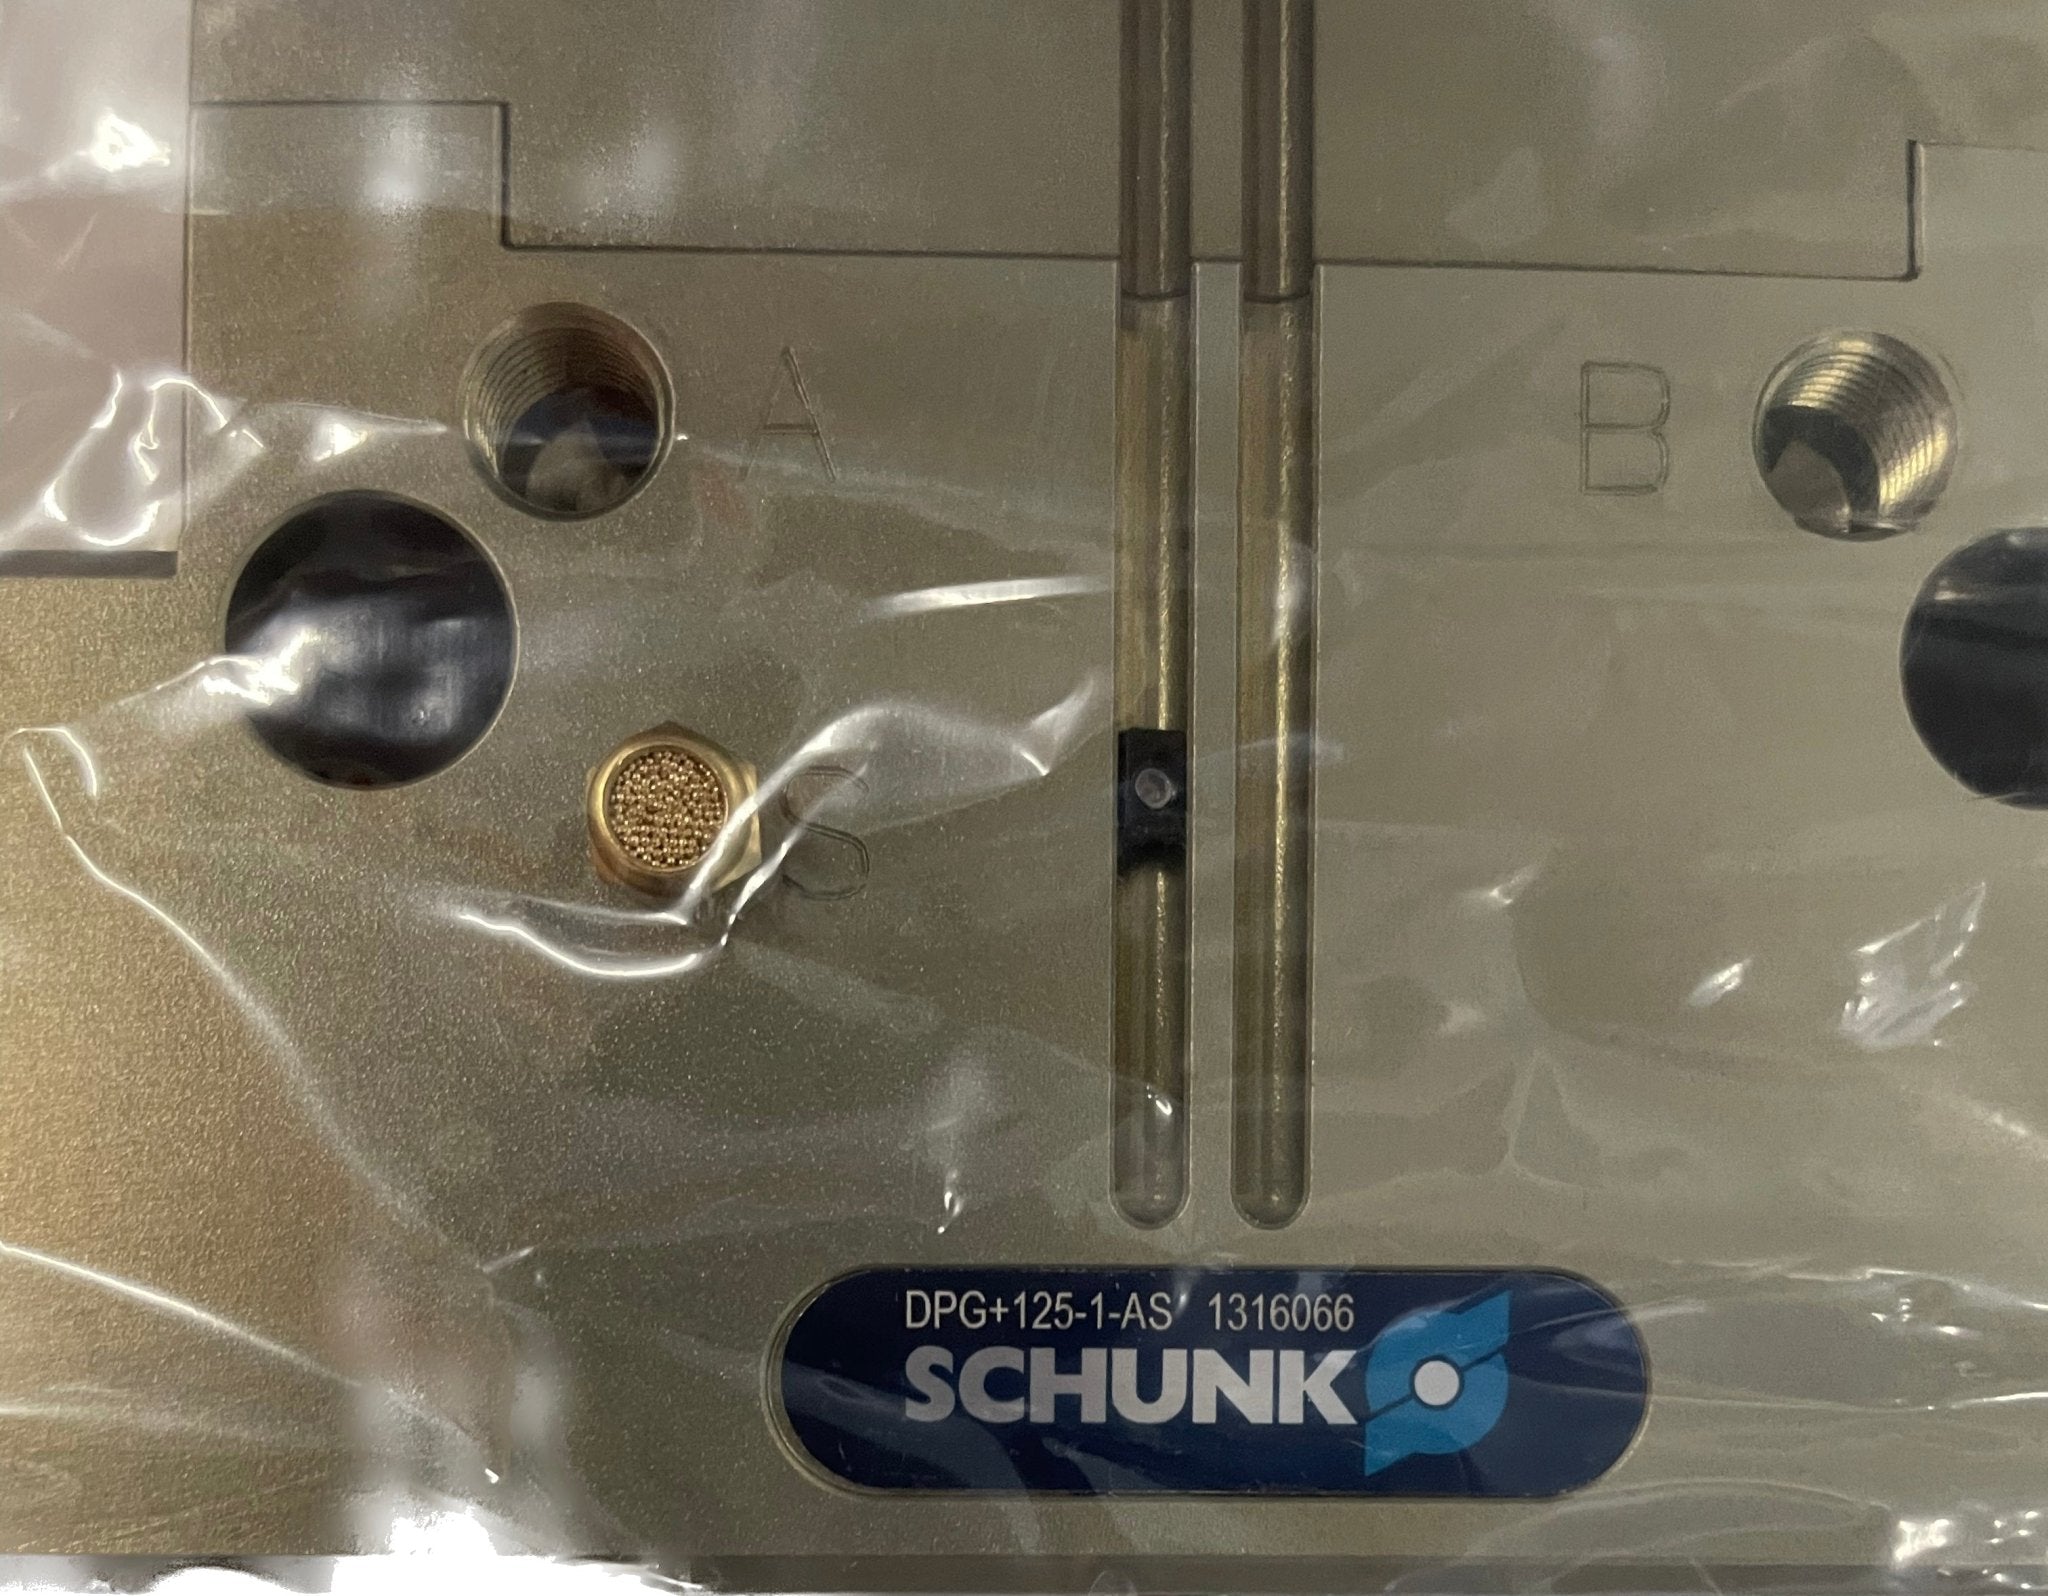 Schunk Dichter Universalgreifer DPG-plus 125-1-AS - #product_category# | Klenk Maschinenhandel